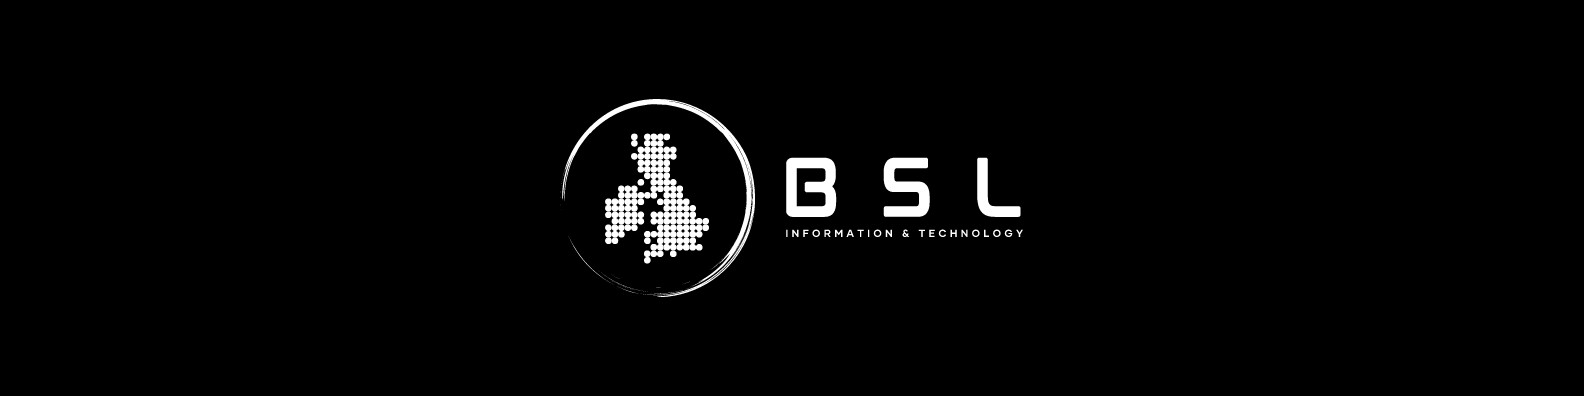 BSL-IT logo